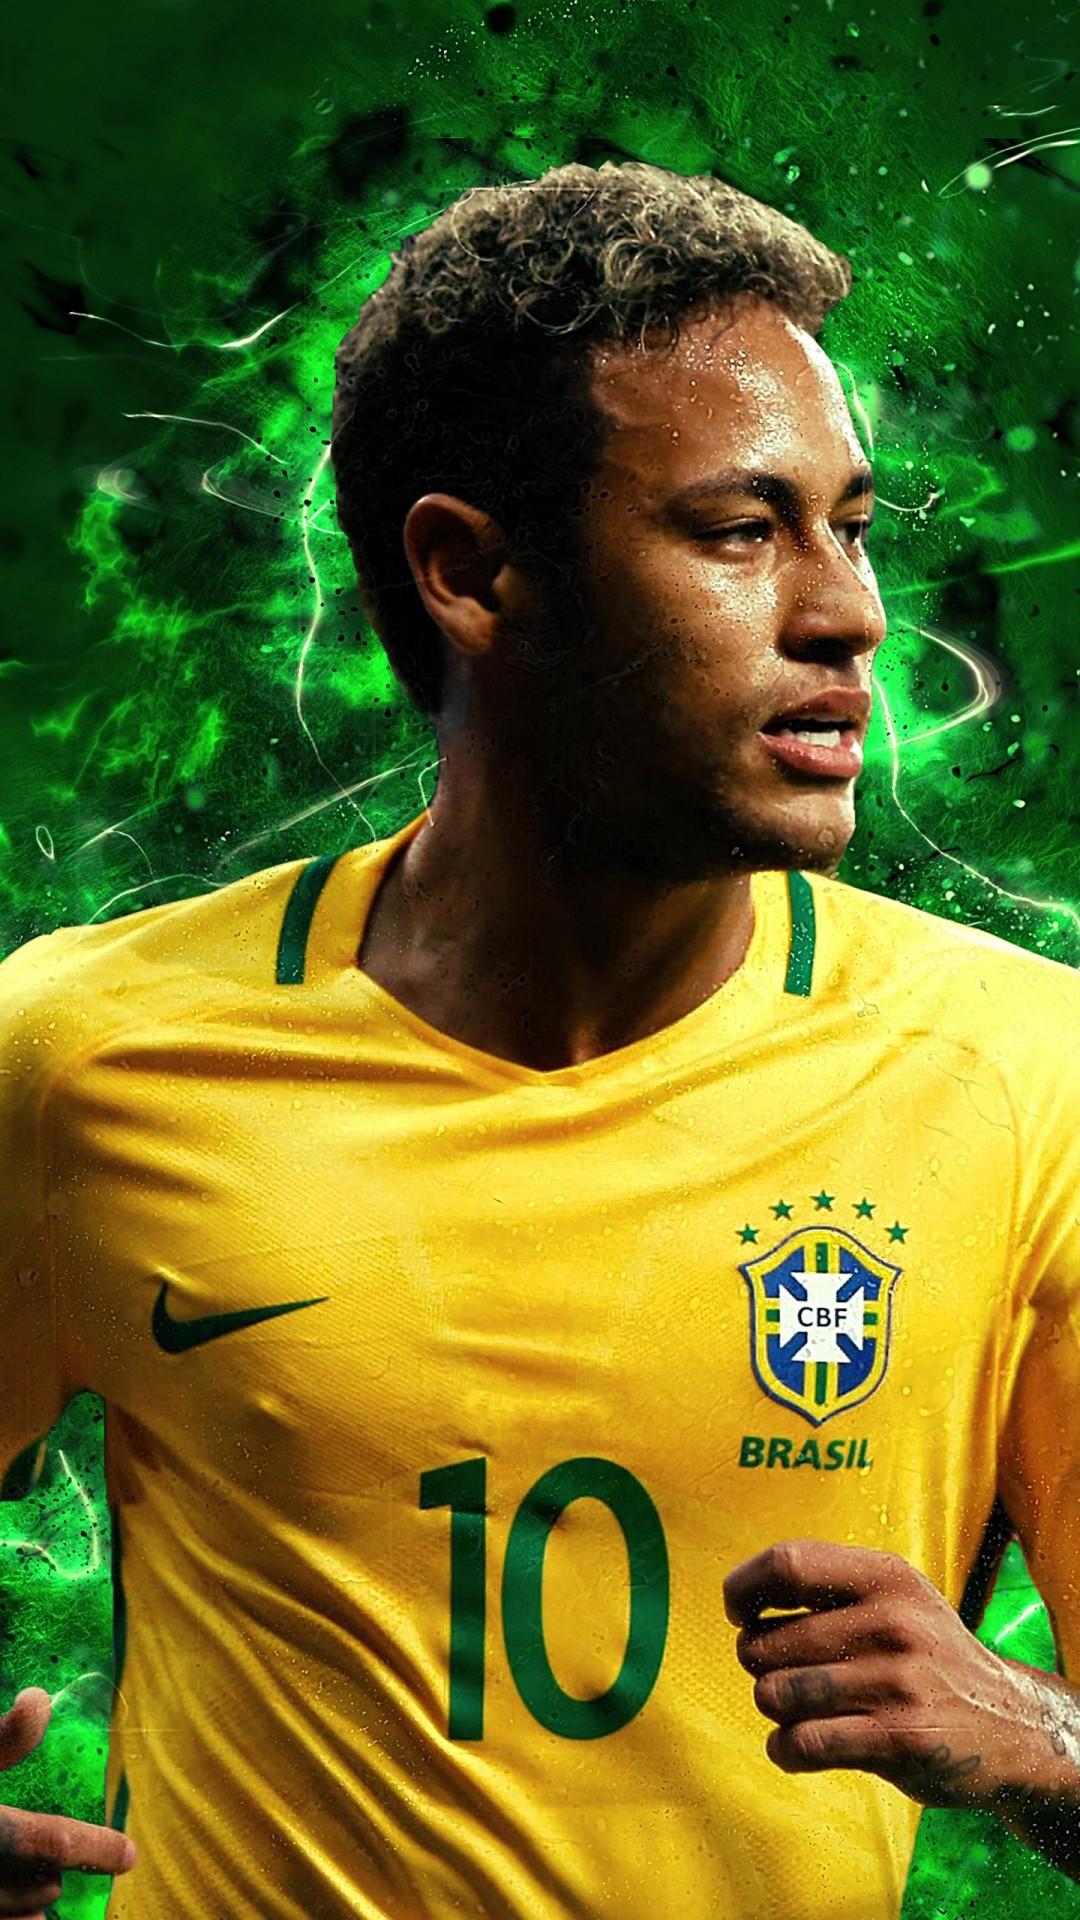 Neymar Jr Wallpaper 1